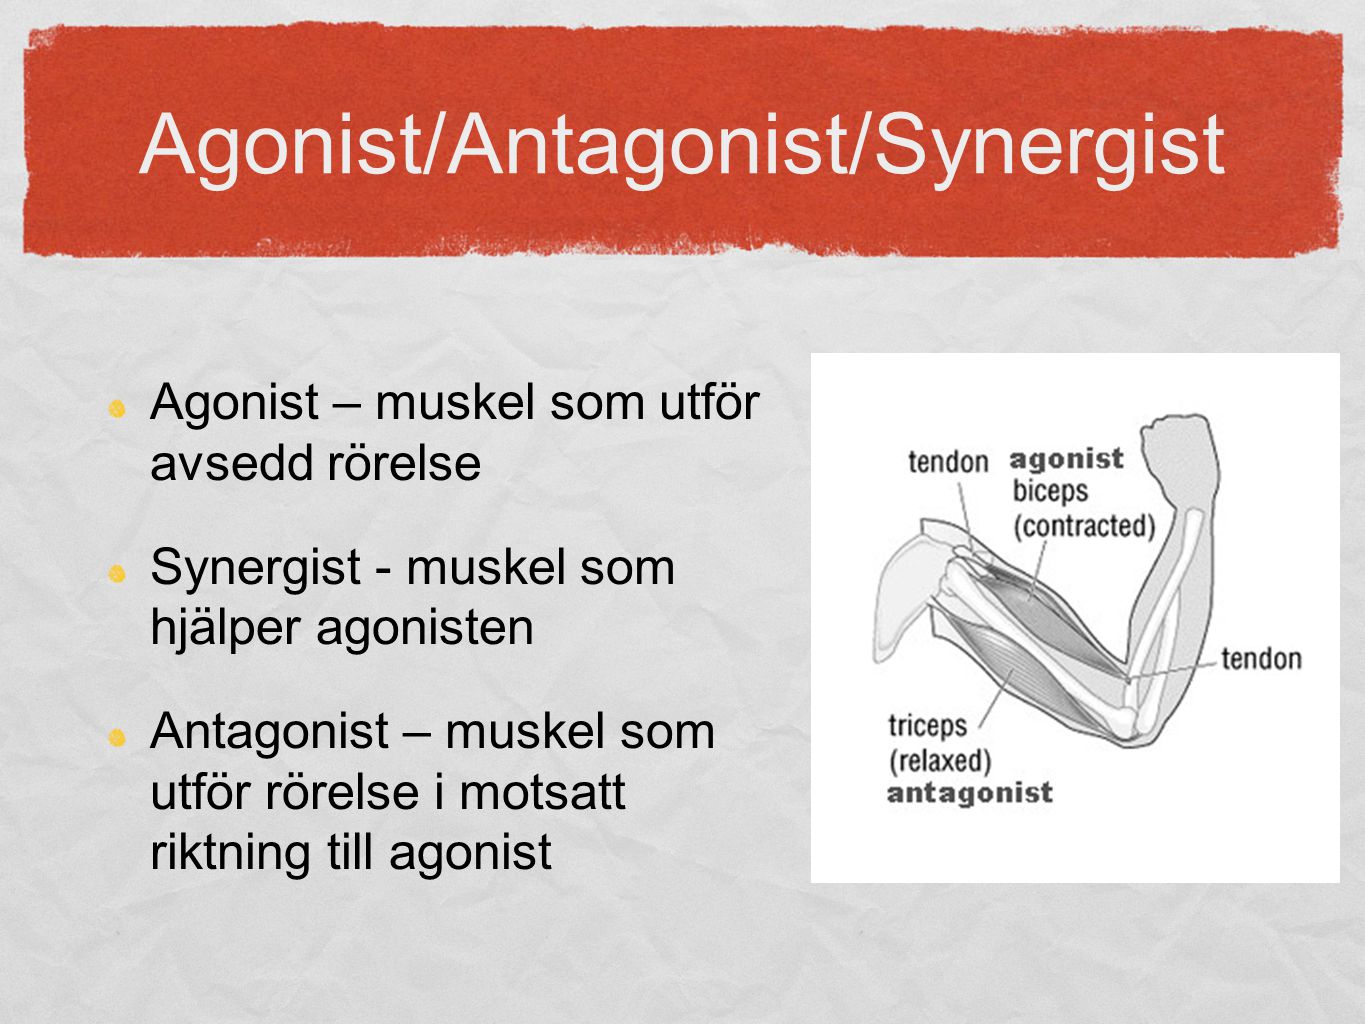 Agonist/Antagonist/Synergist